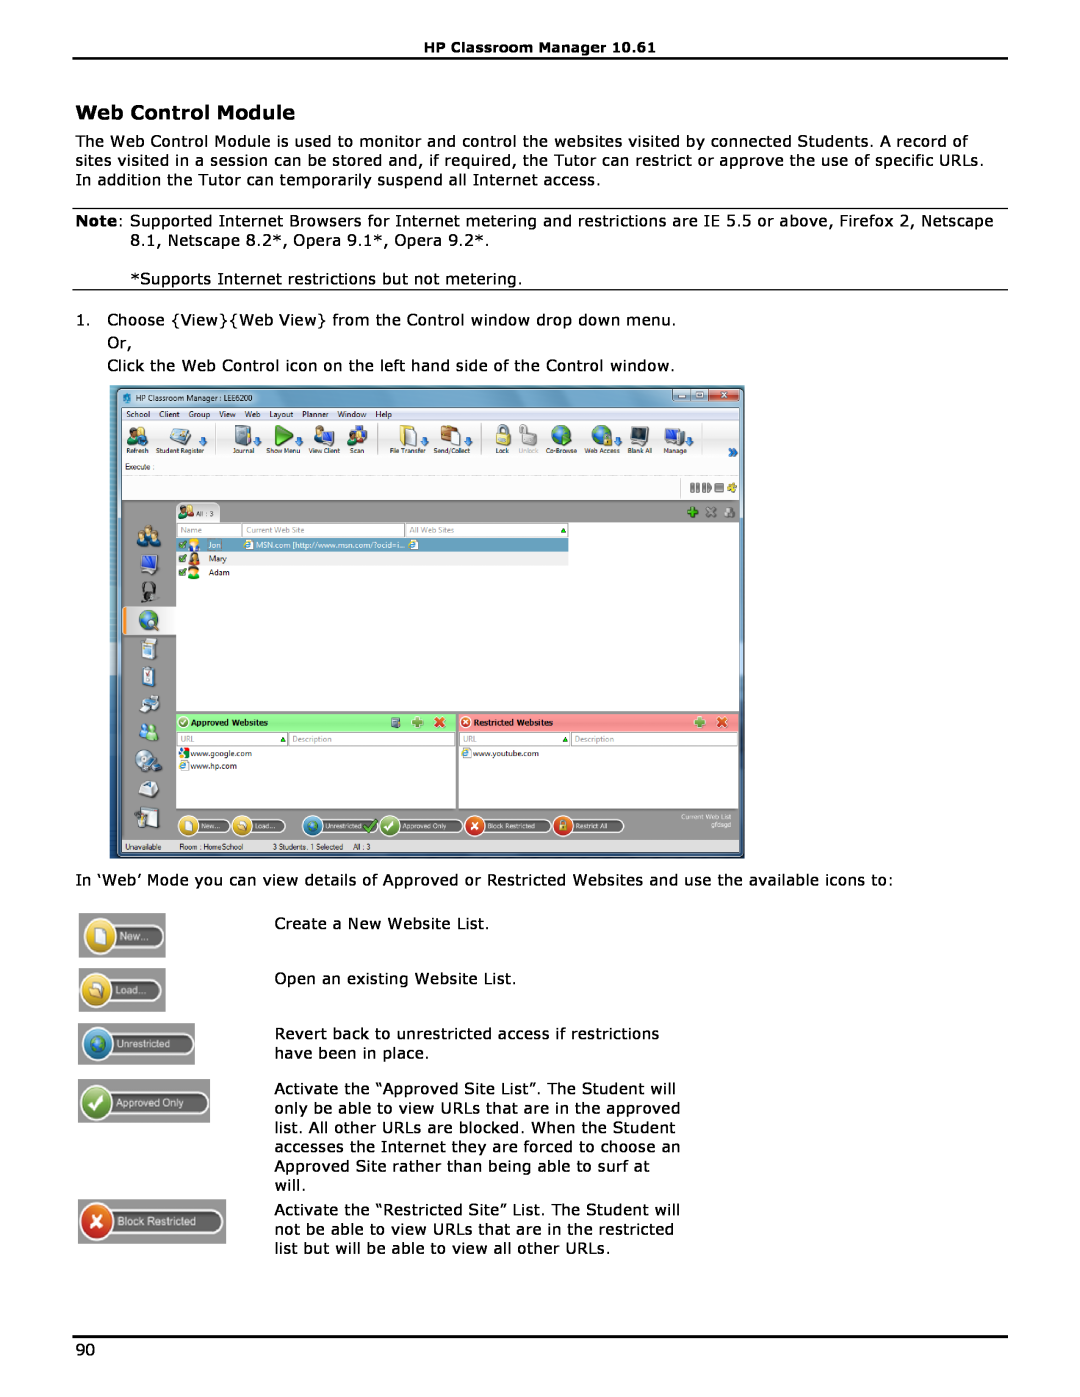 HP Classroom Manager manual Web Control Module 